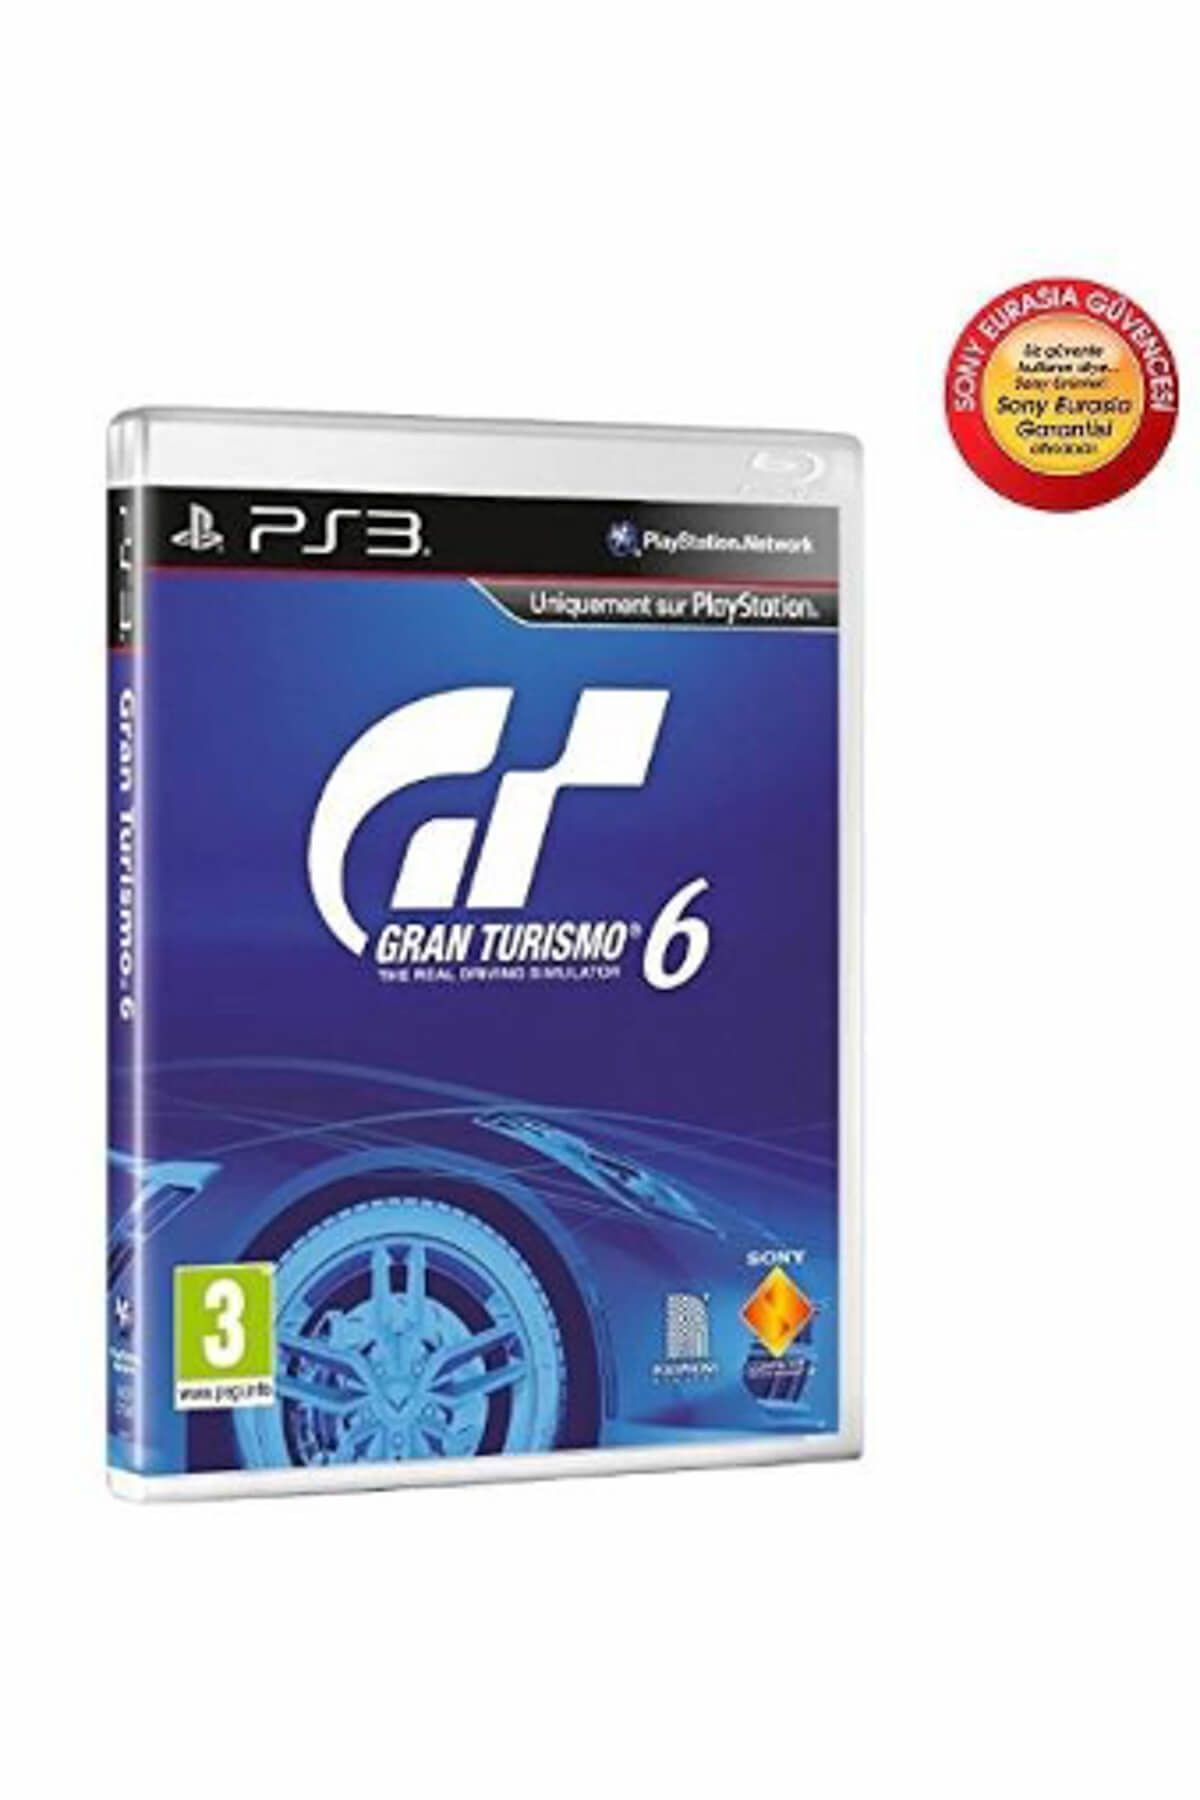 Sony PS3 Gran Turismo 6  (Eurasia Garantili)